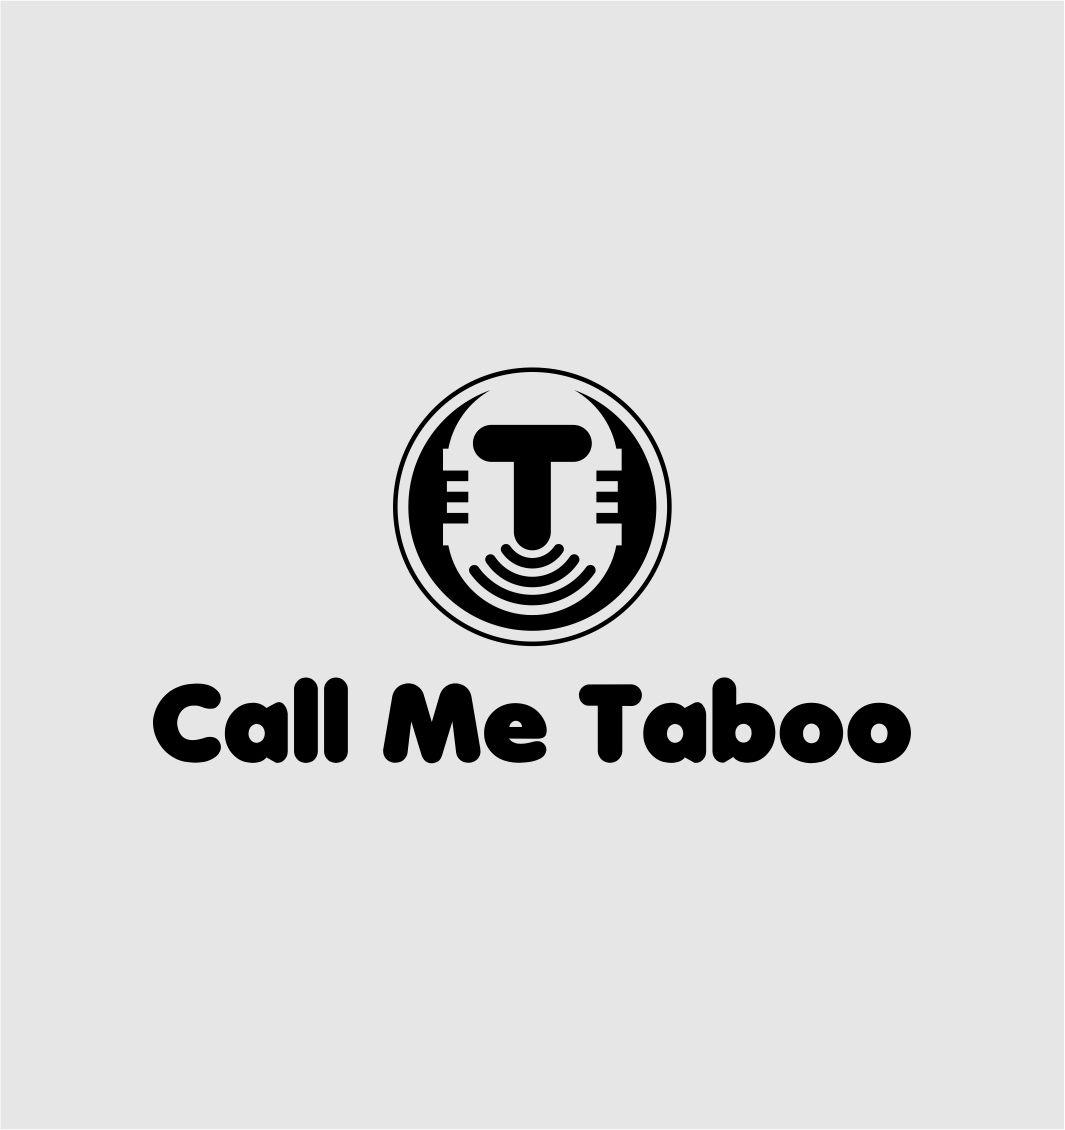 Taboo Logo - Personable, Playful, Call Logo Design for Call Me Taboo